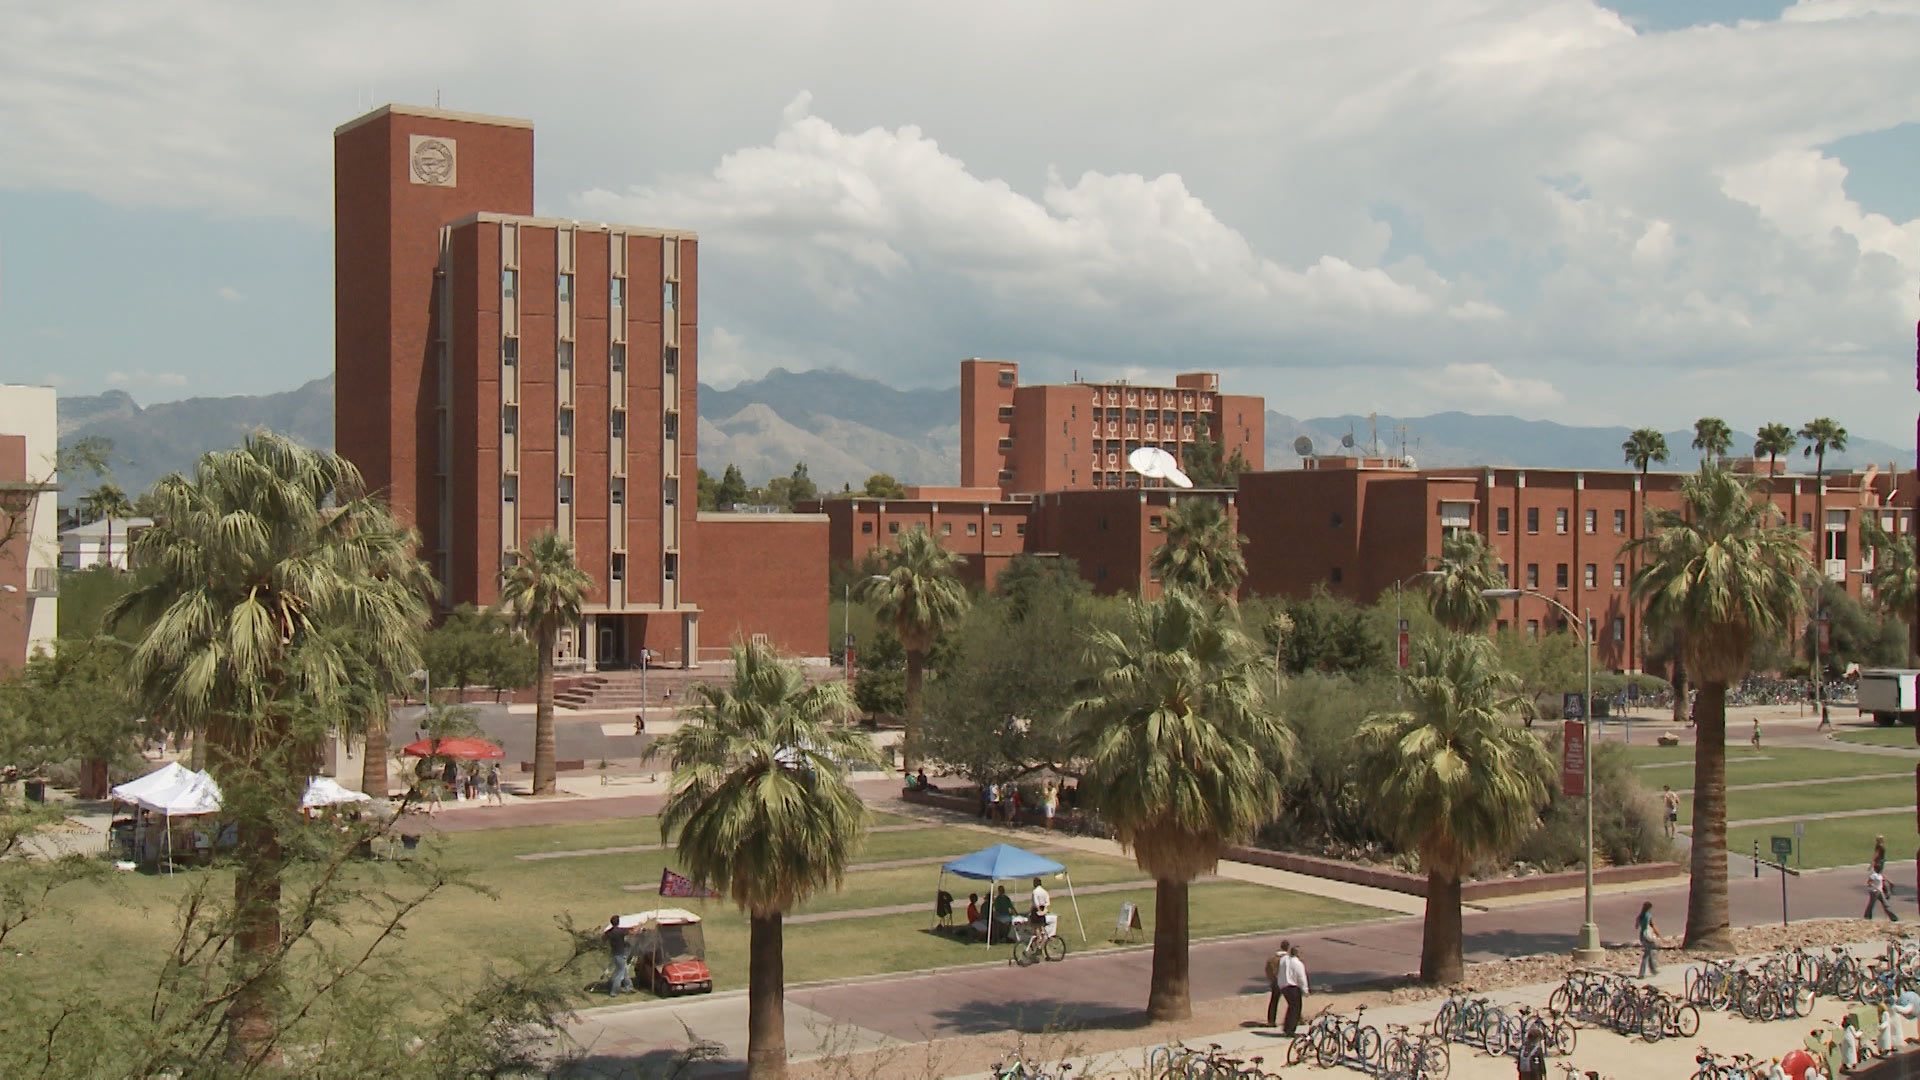 The University of Arizona Administration building.